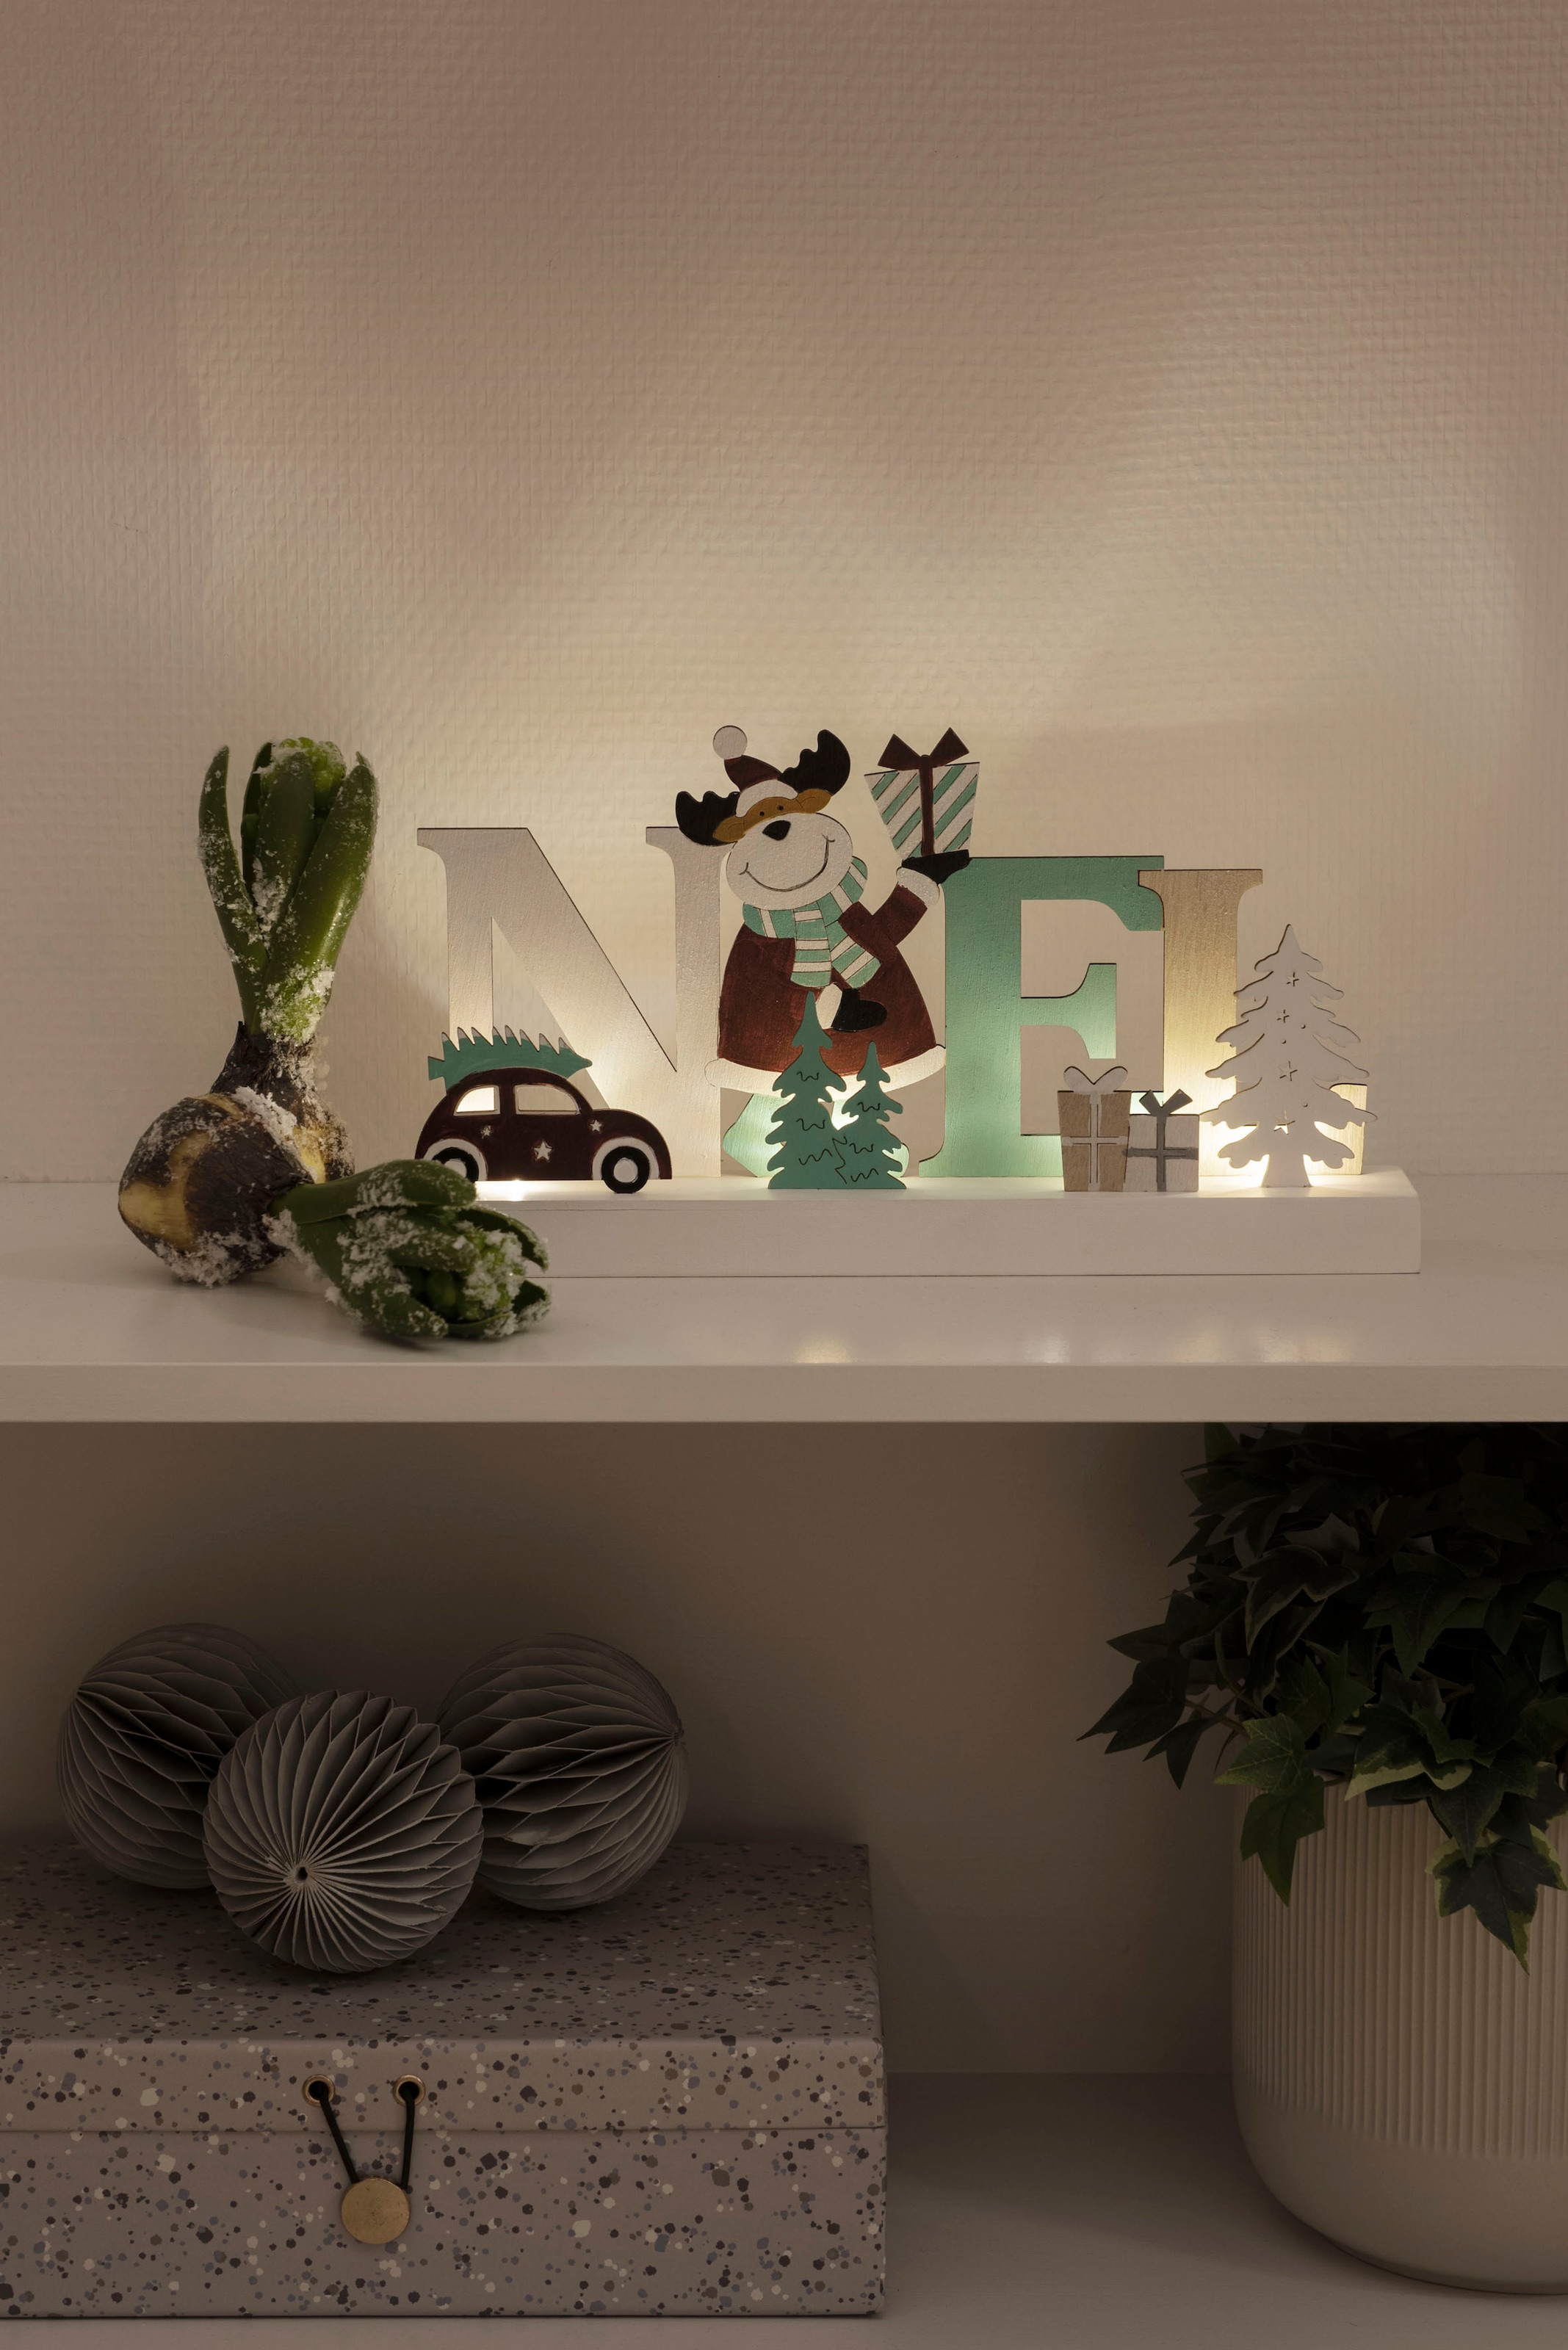 KONSTSMIDE Deko-Schriftzug »Noël«, warm LED Holzsilhouette, batteriebetrieben 4 Dioden, bequem weiße kaufen 6h Timer